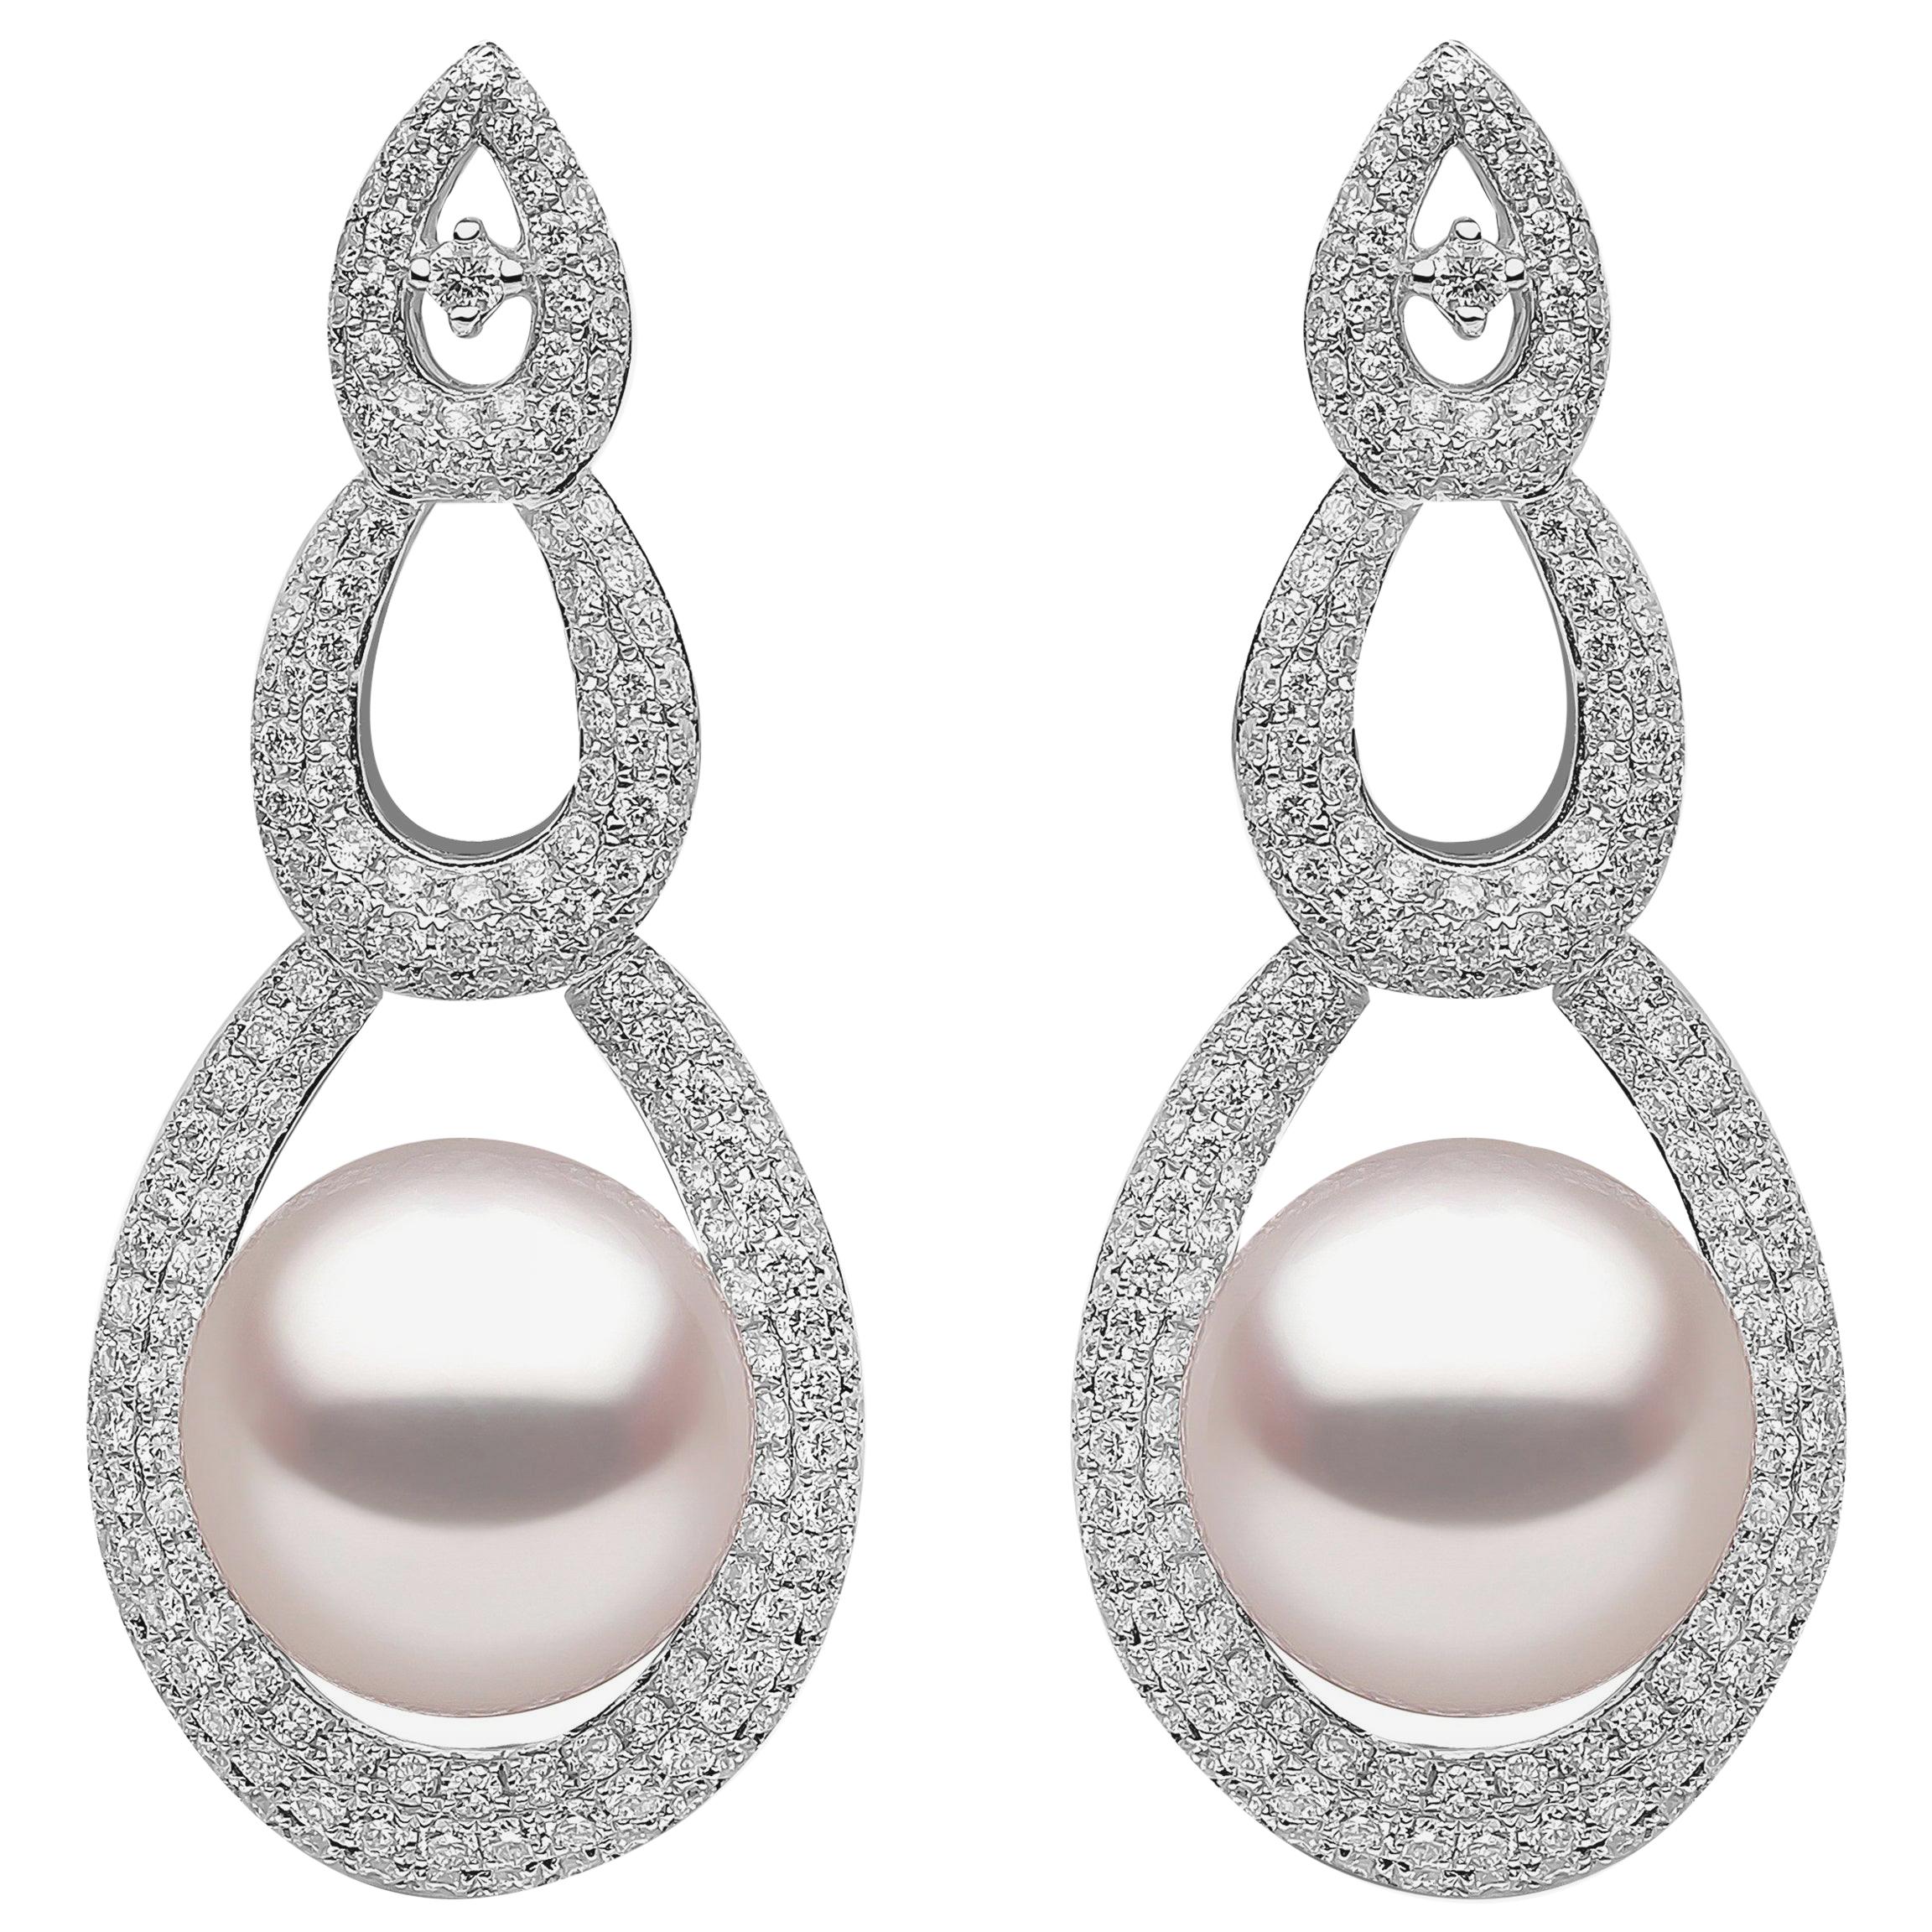 Yoko London South Sea Pearl and Diamond Drop Earrings in 18 Karat White Gold